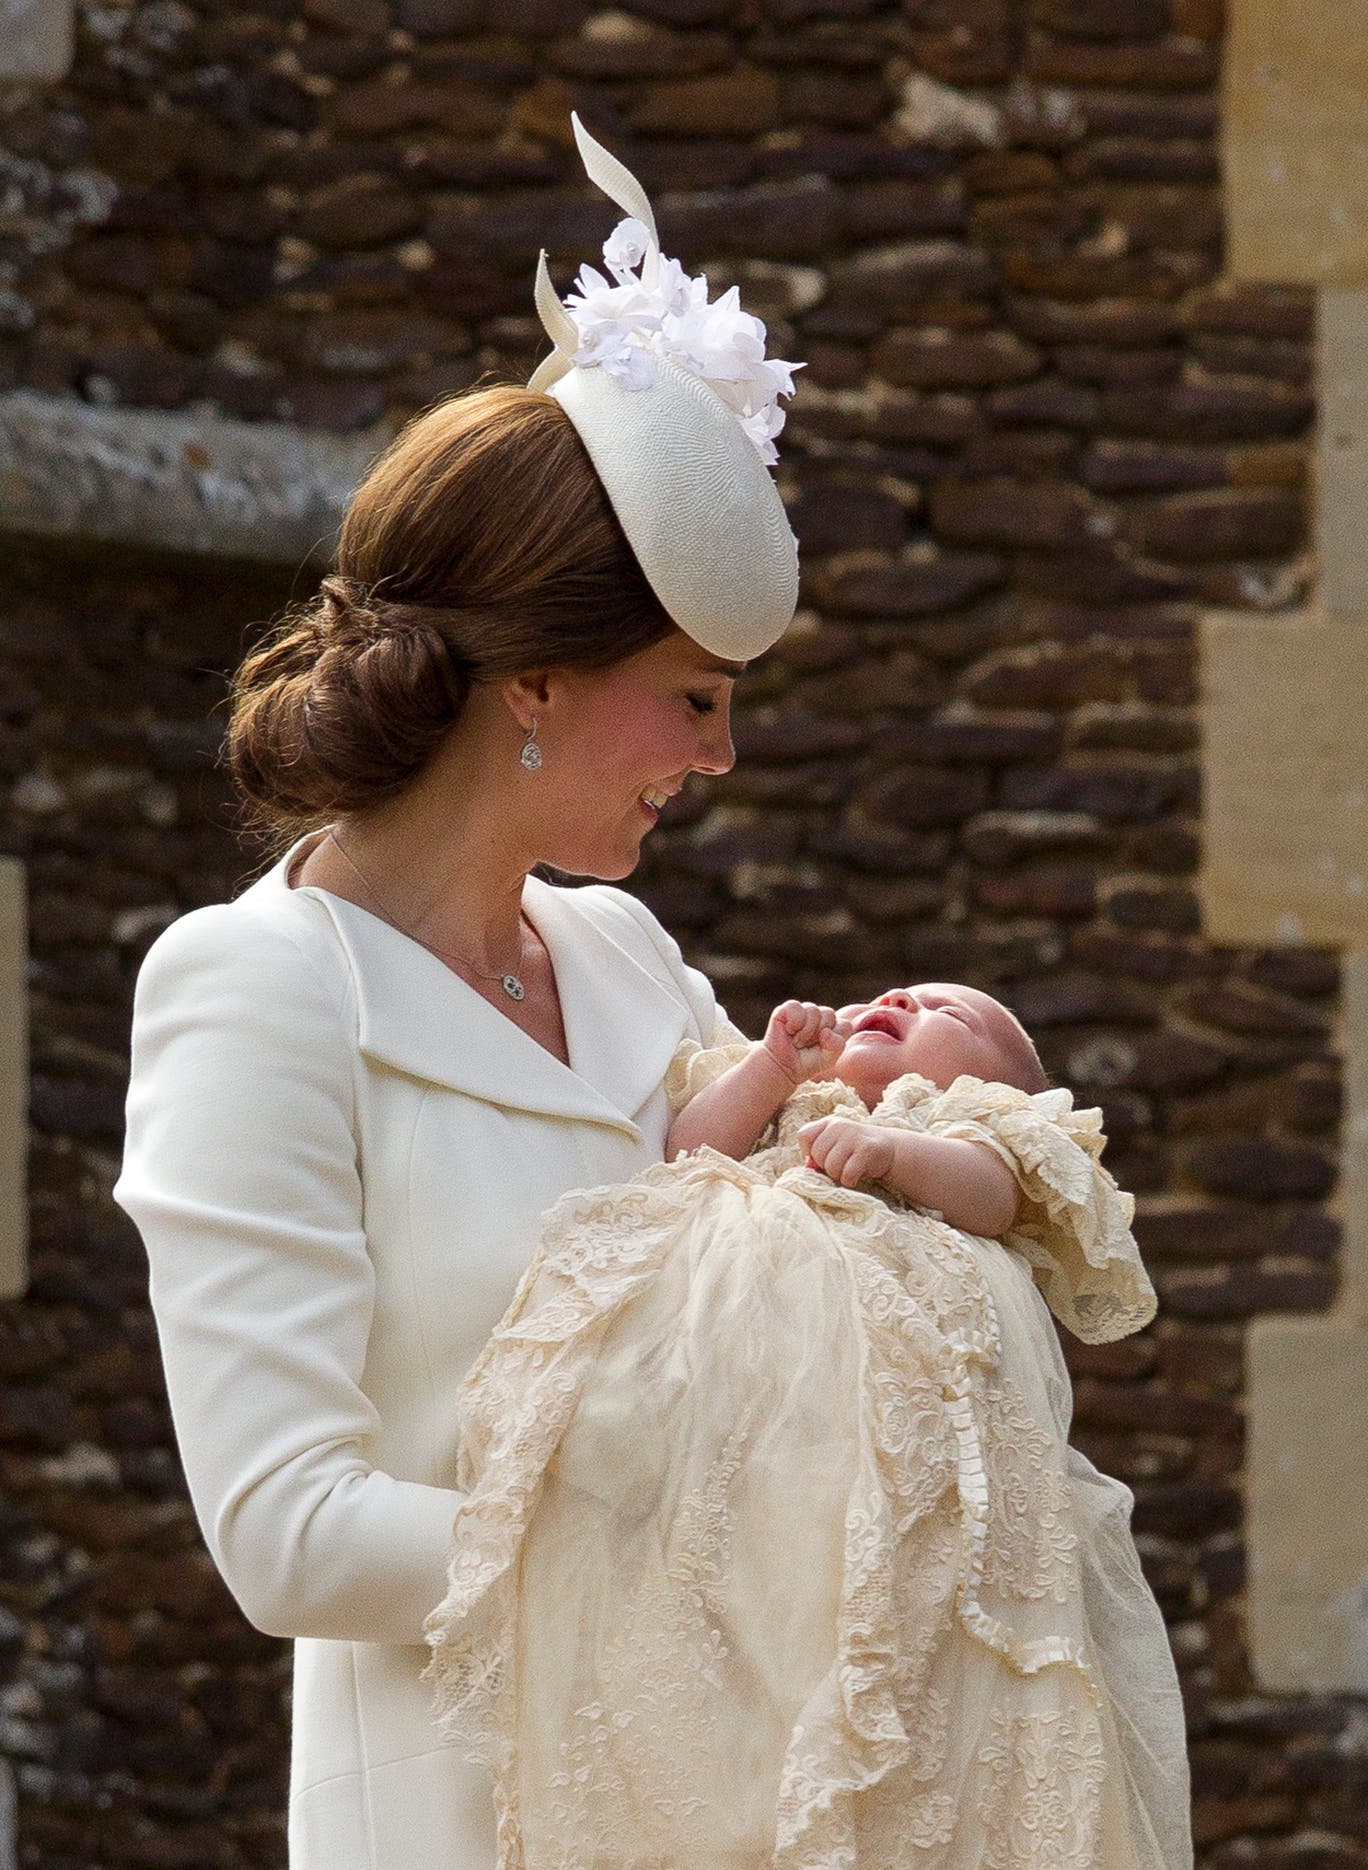 Kate at Princess Charlotte’s christening